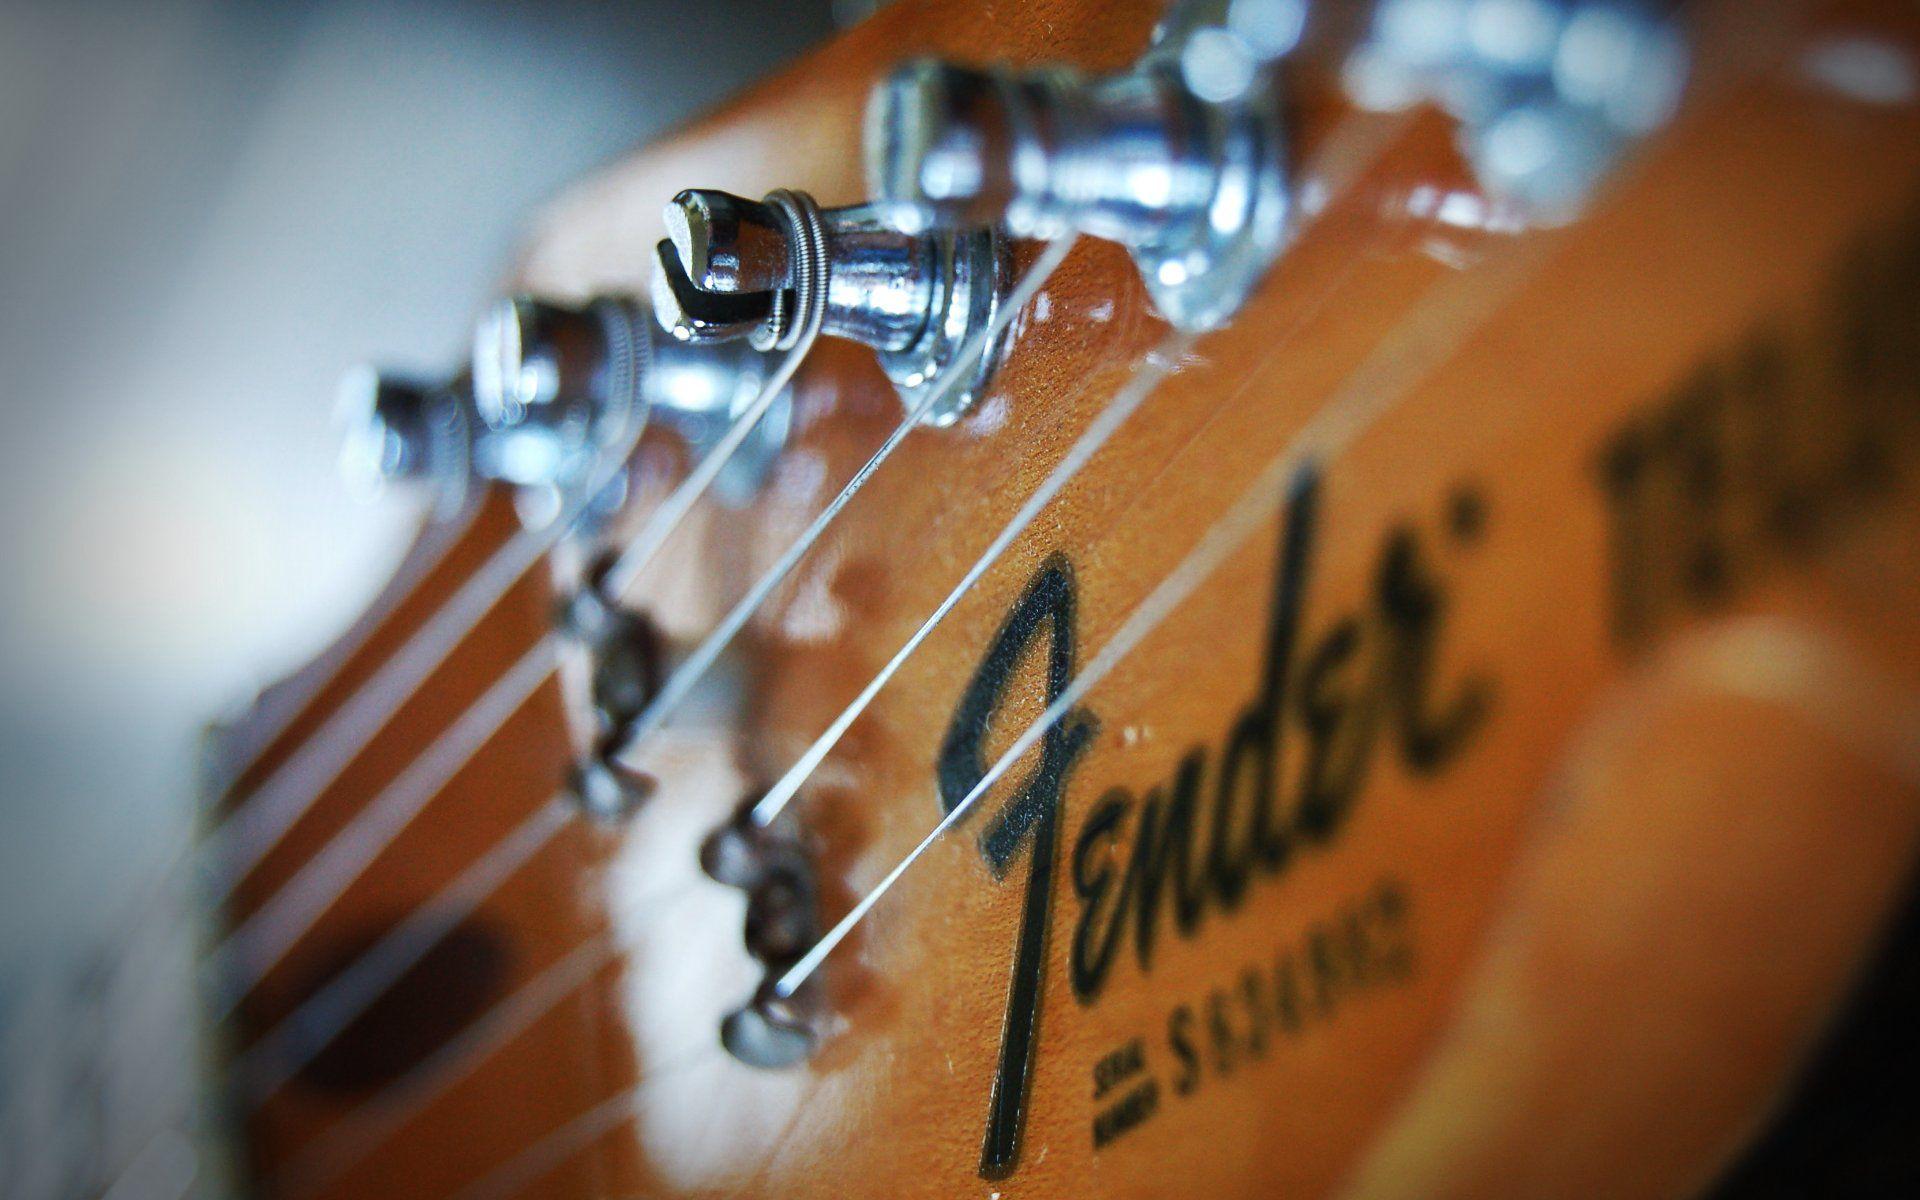 Fender Guitar Up Close Wallpaper 63160 1920x1200px